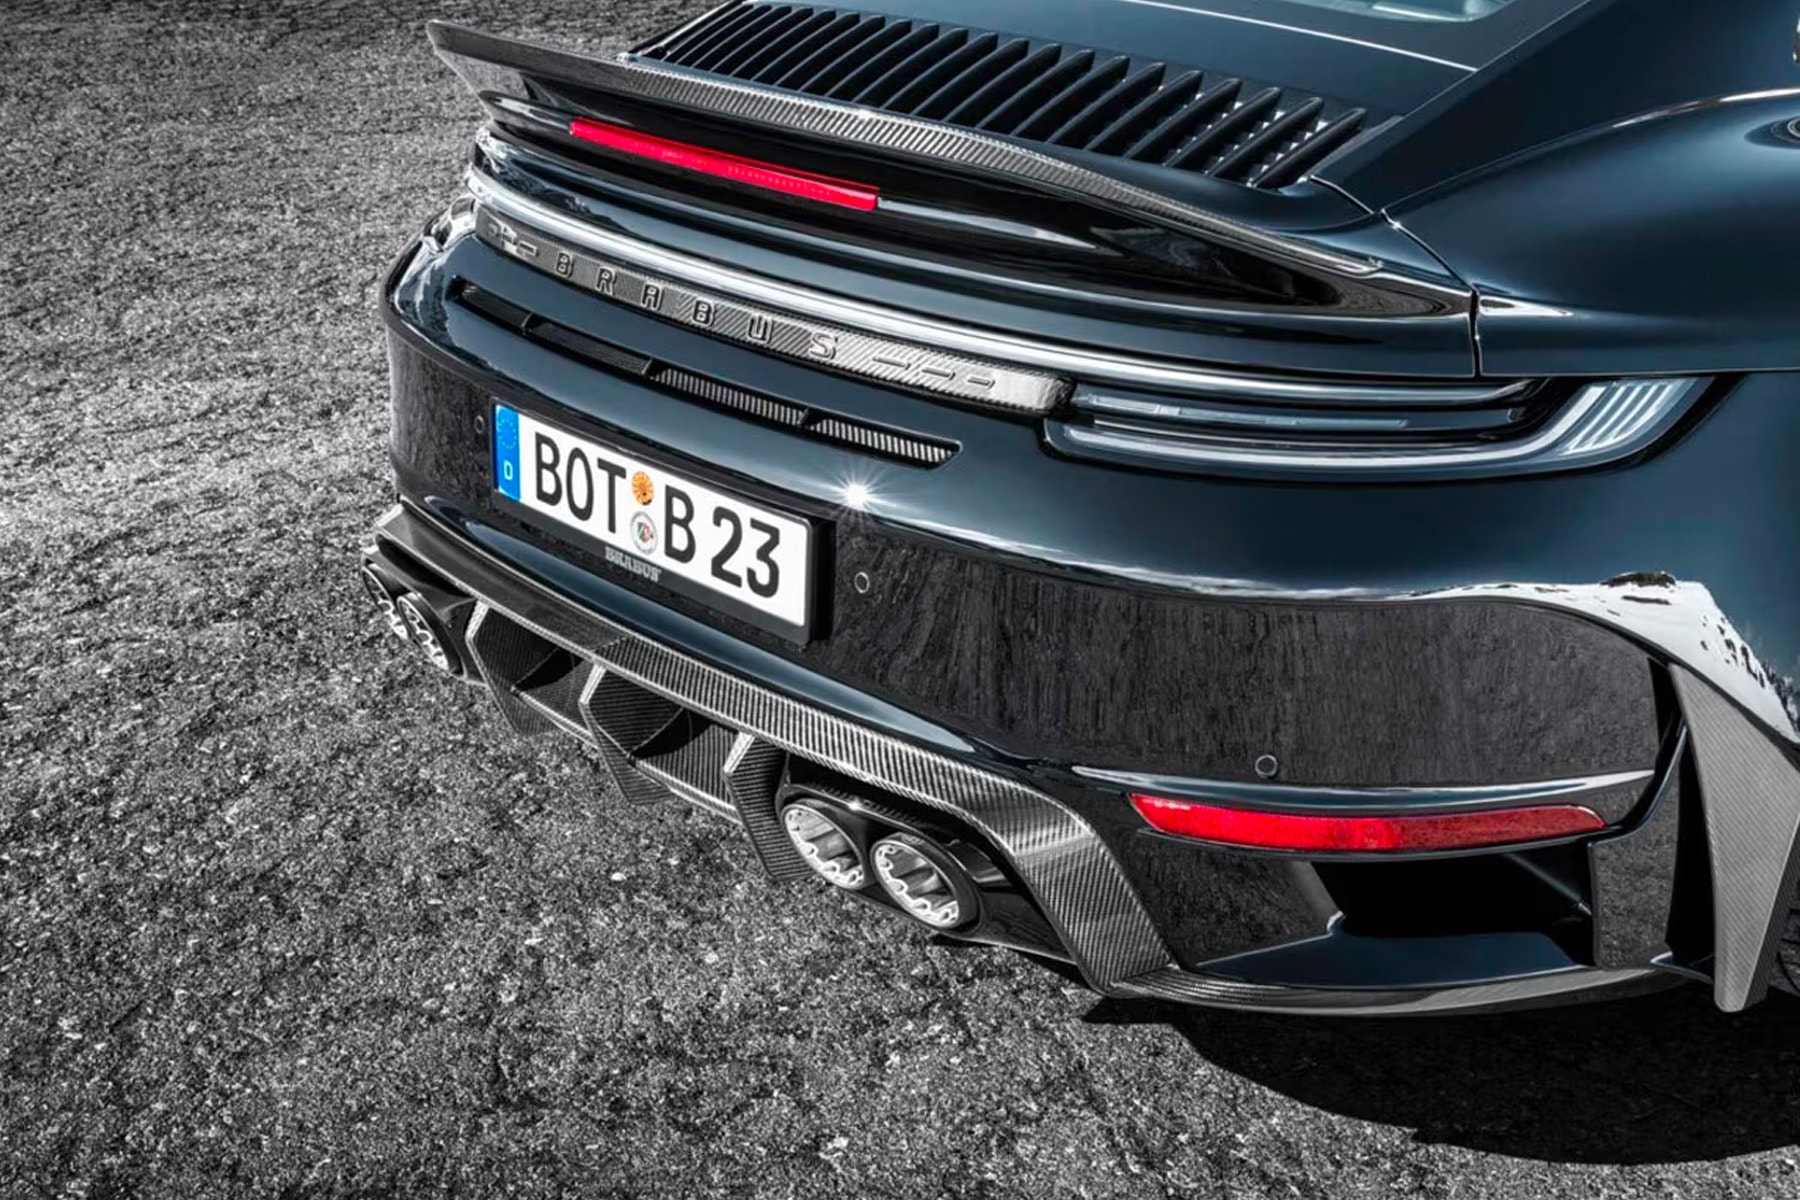 Brabus 打造 900 匹馬力全新 Porsche 911 Turbo S Coupe 改裝車款